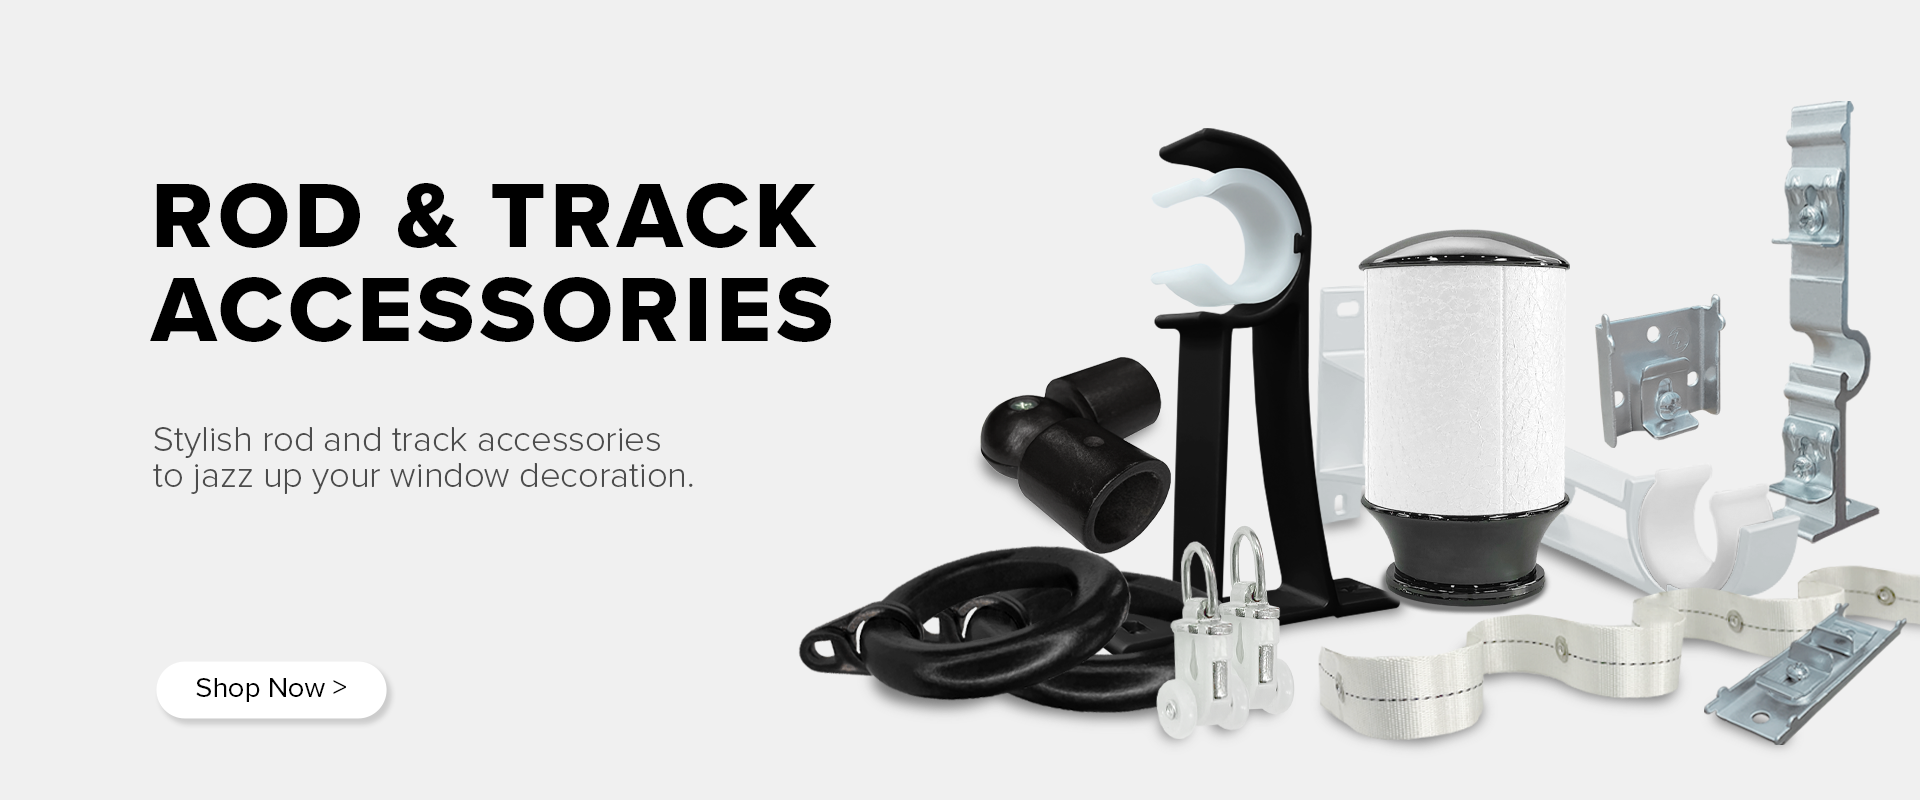 Rod & Track Accessories